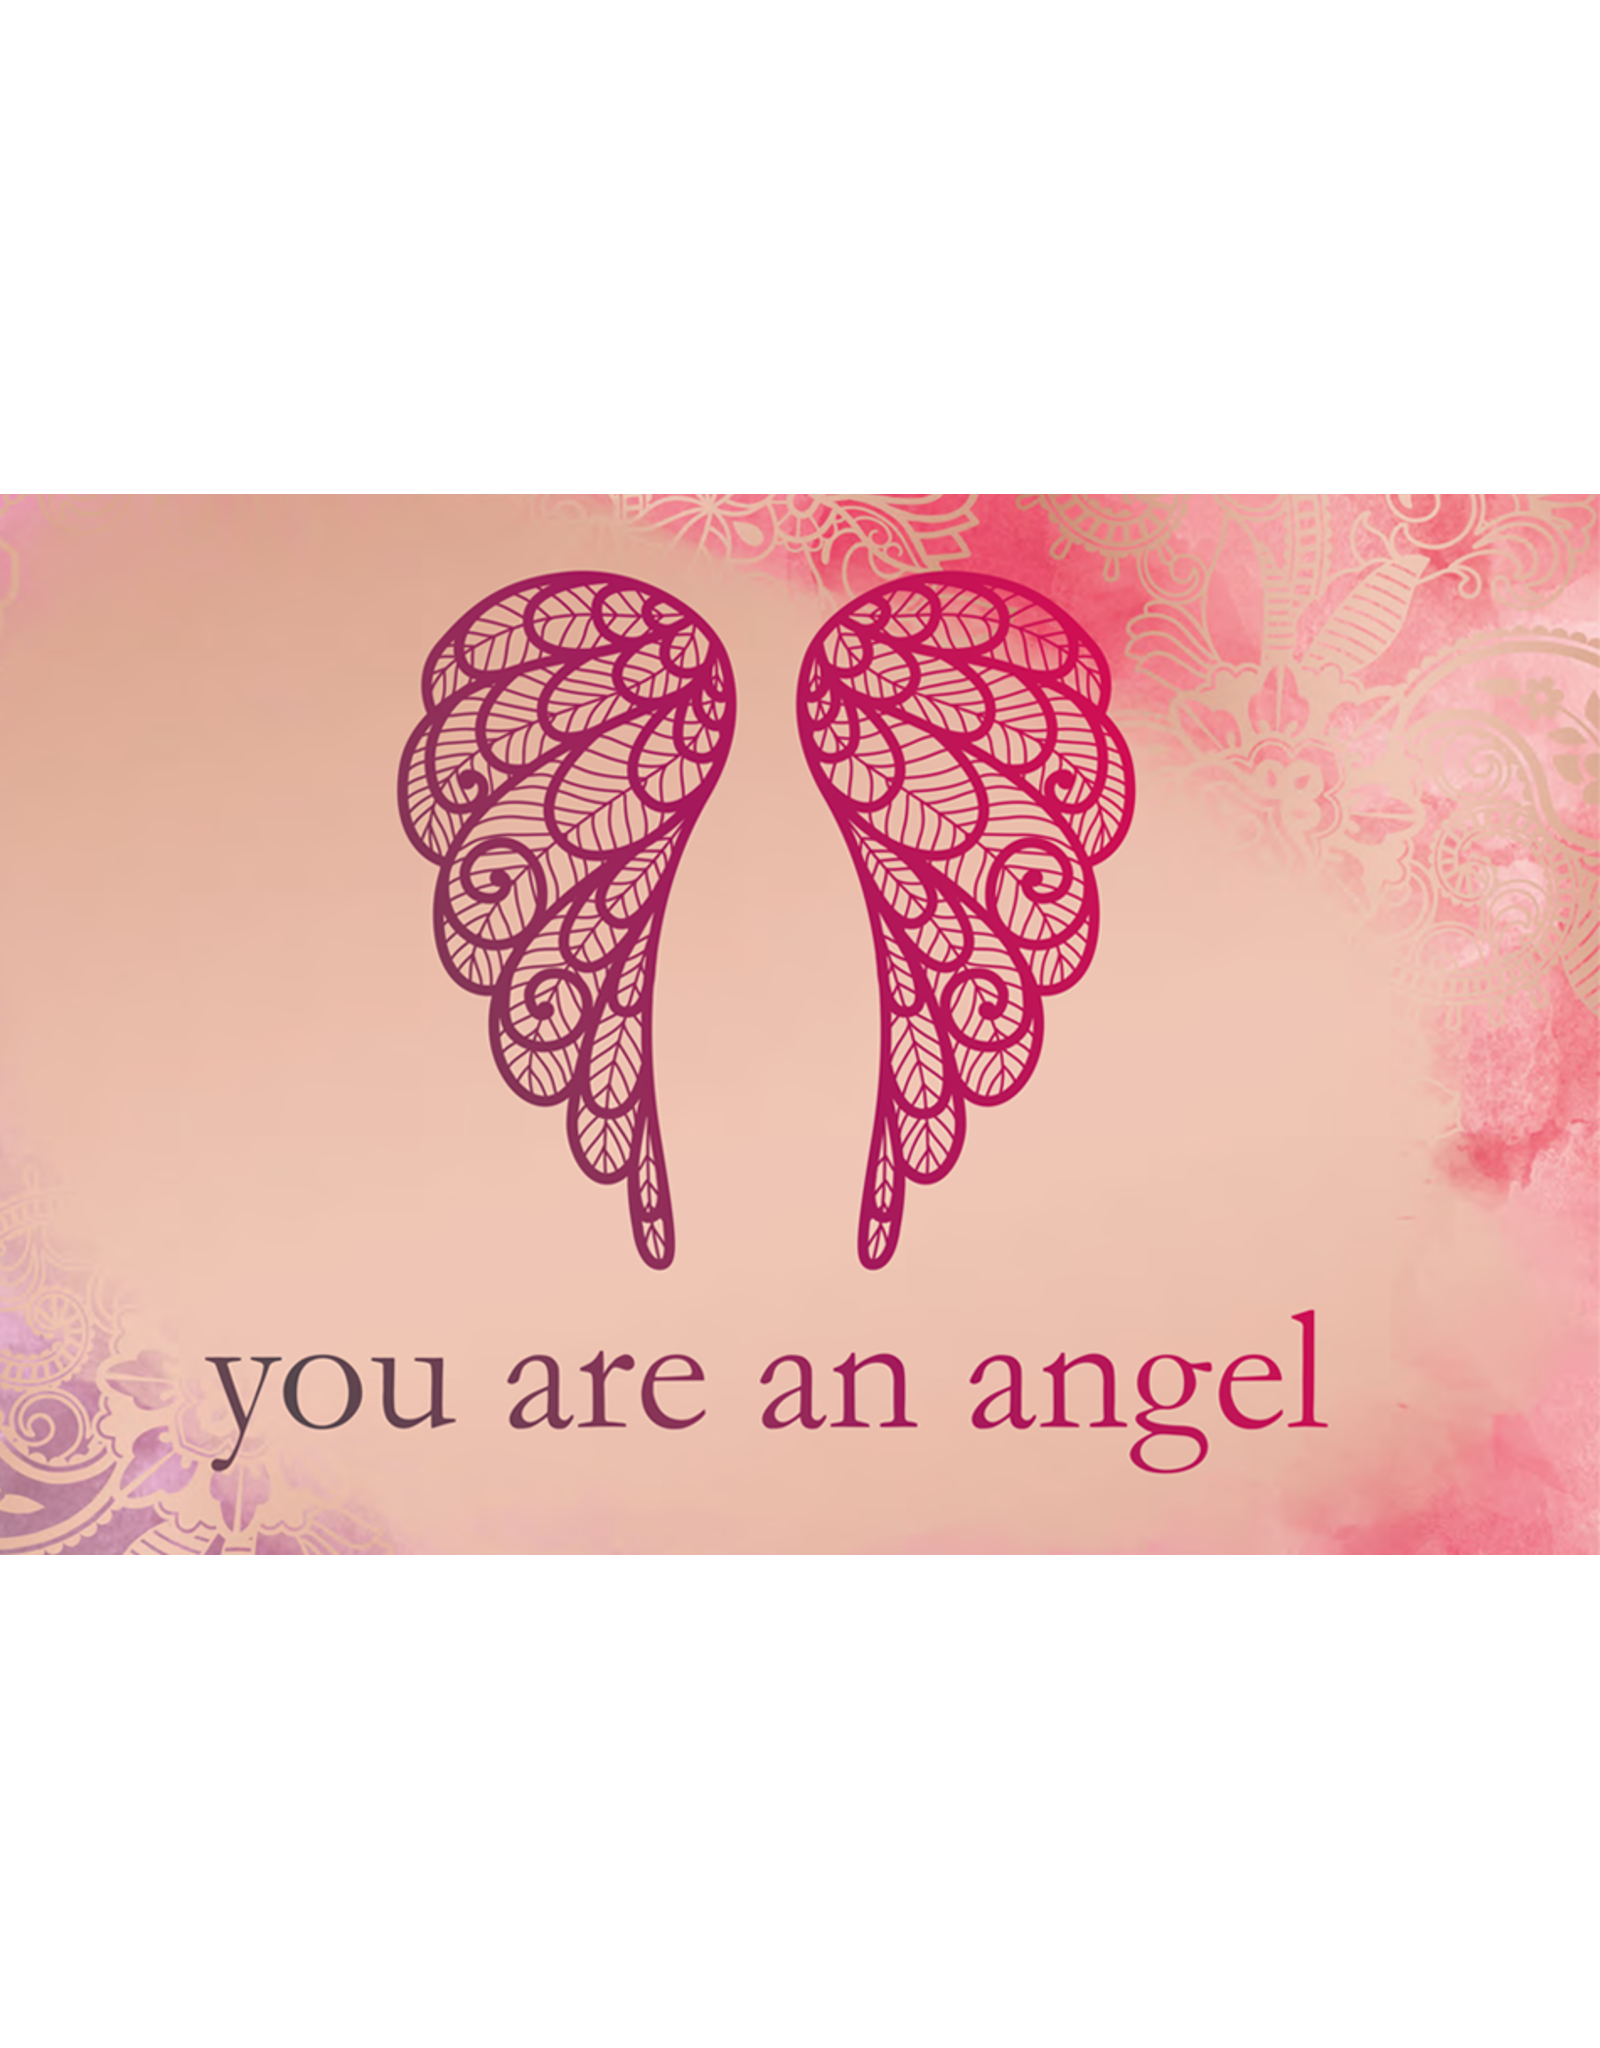 You are an angel Mok engel live simply